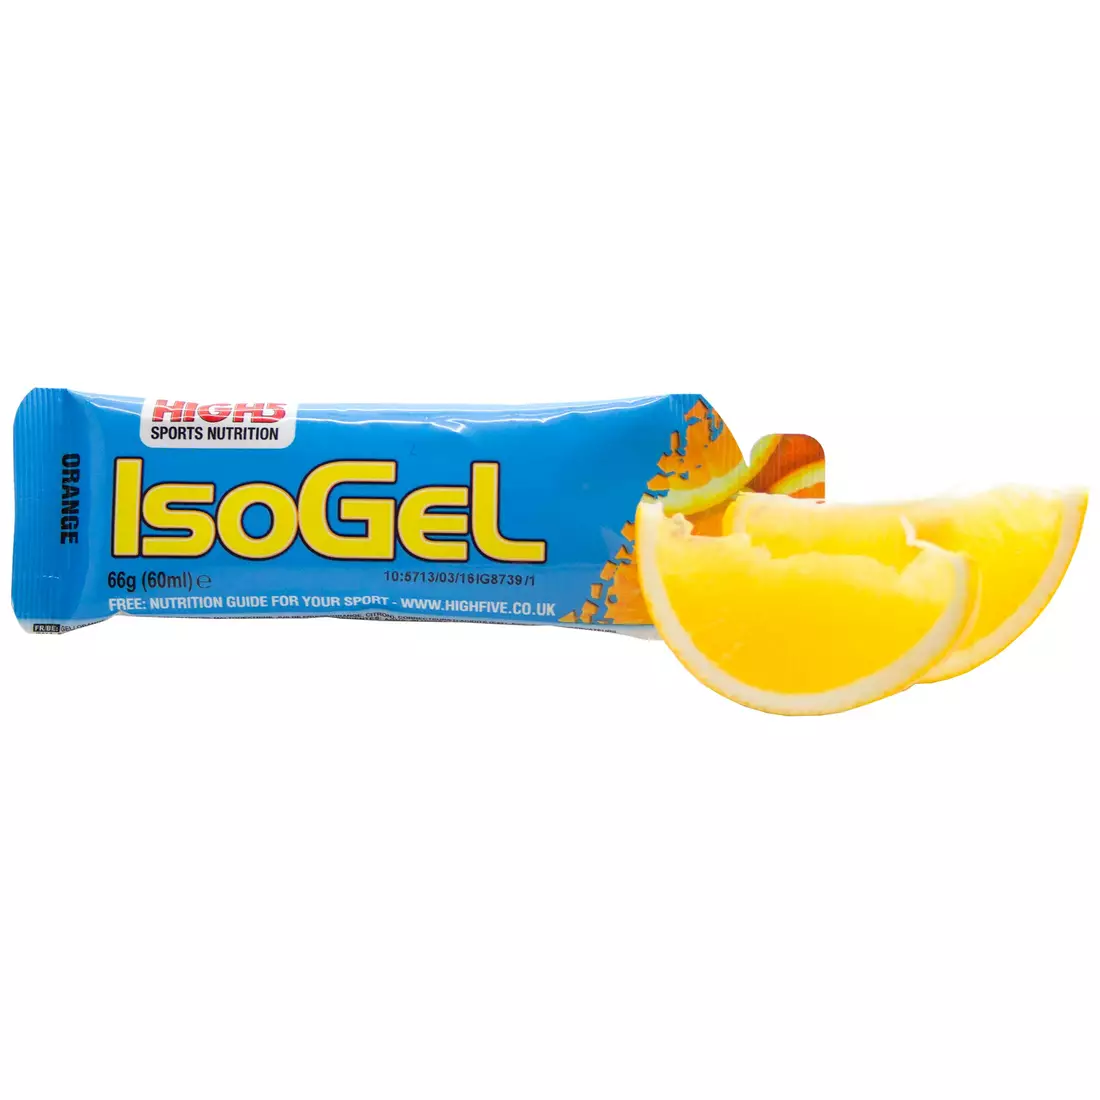 HIGH5 IsoGel isotonic gel flavor: Orange capacity. 60ml